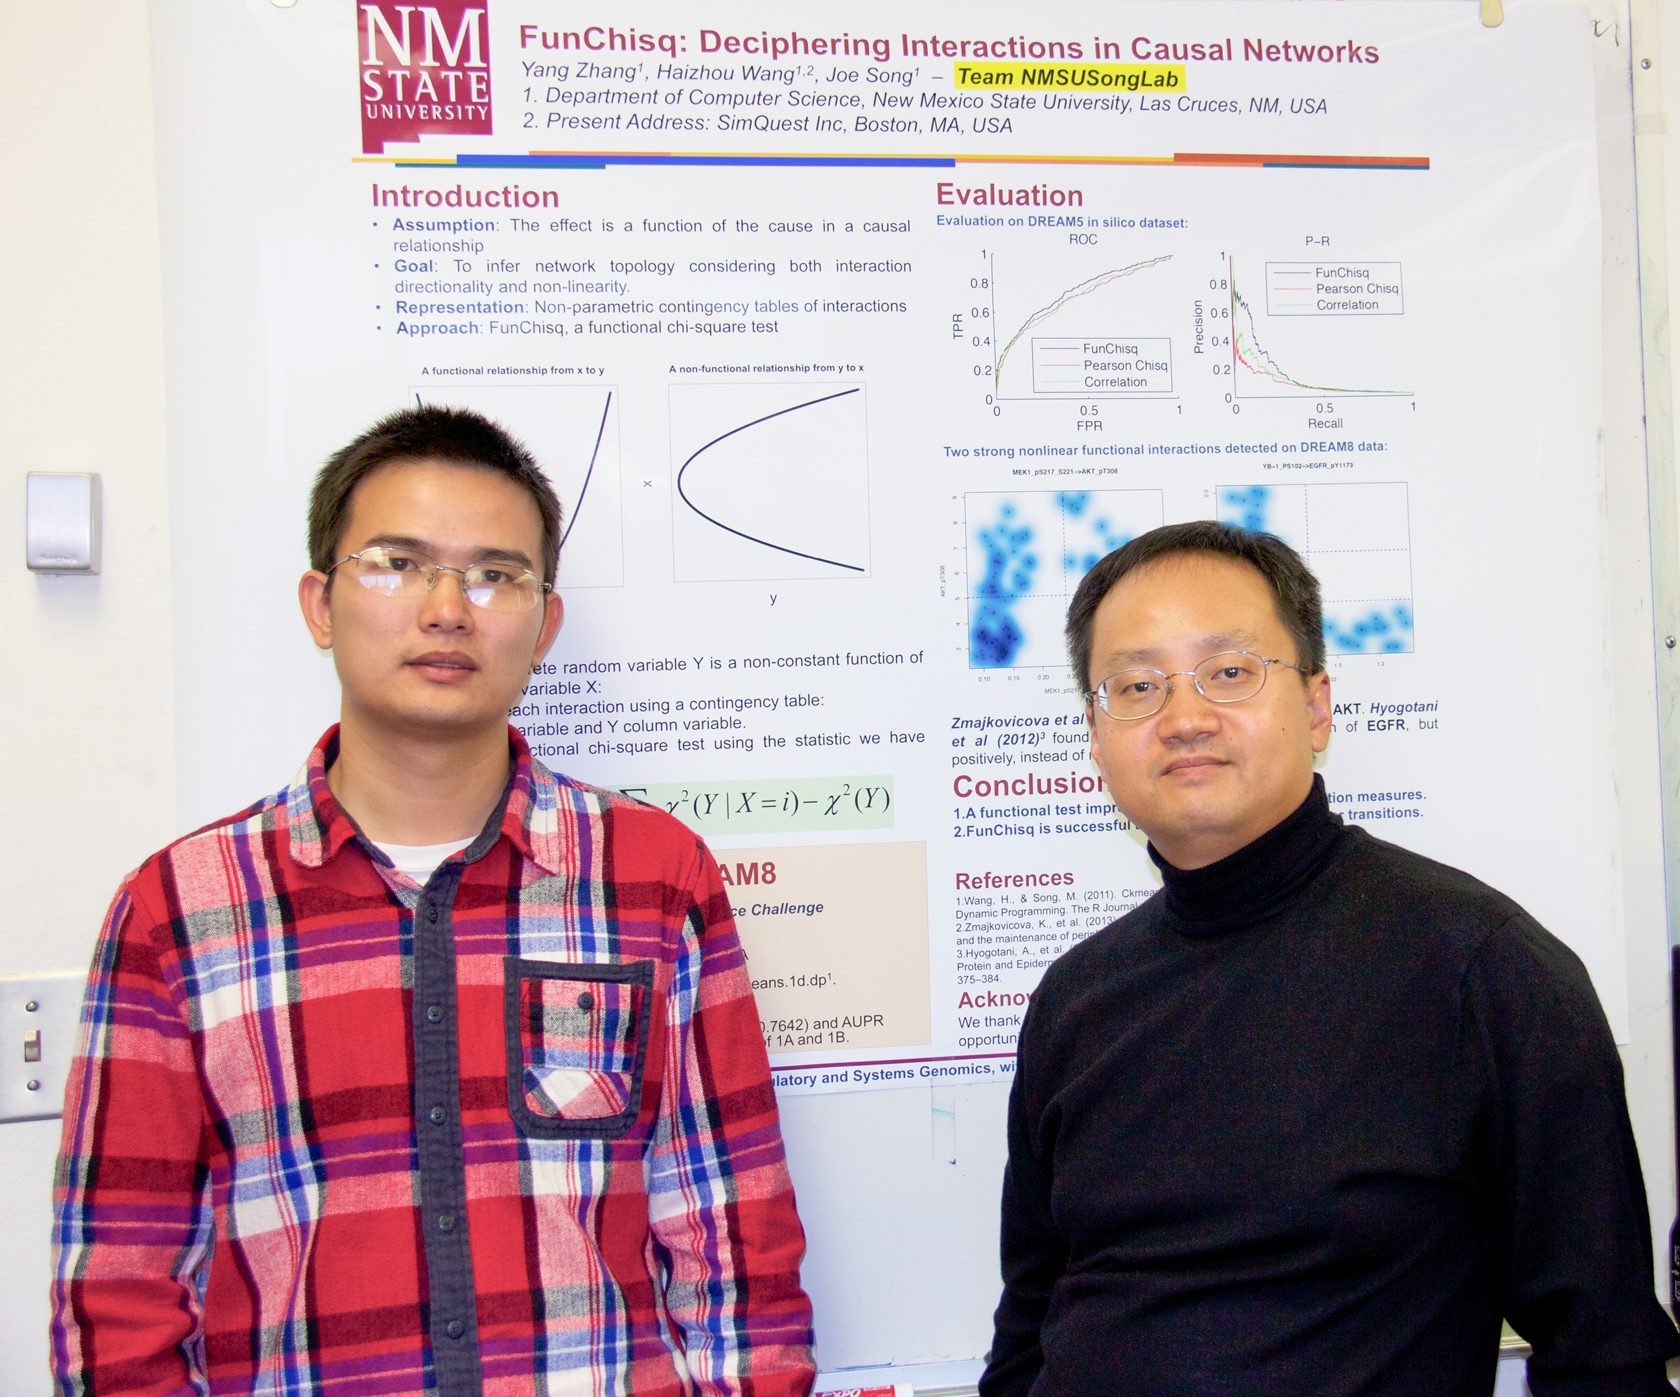 NMSU student Yang Zhang and his mentor, Professor Joe Song.